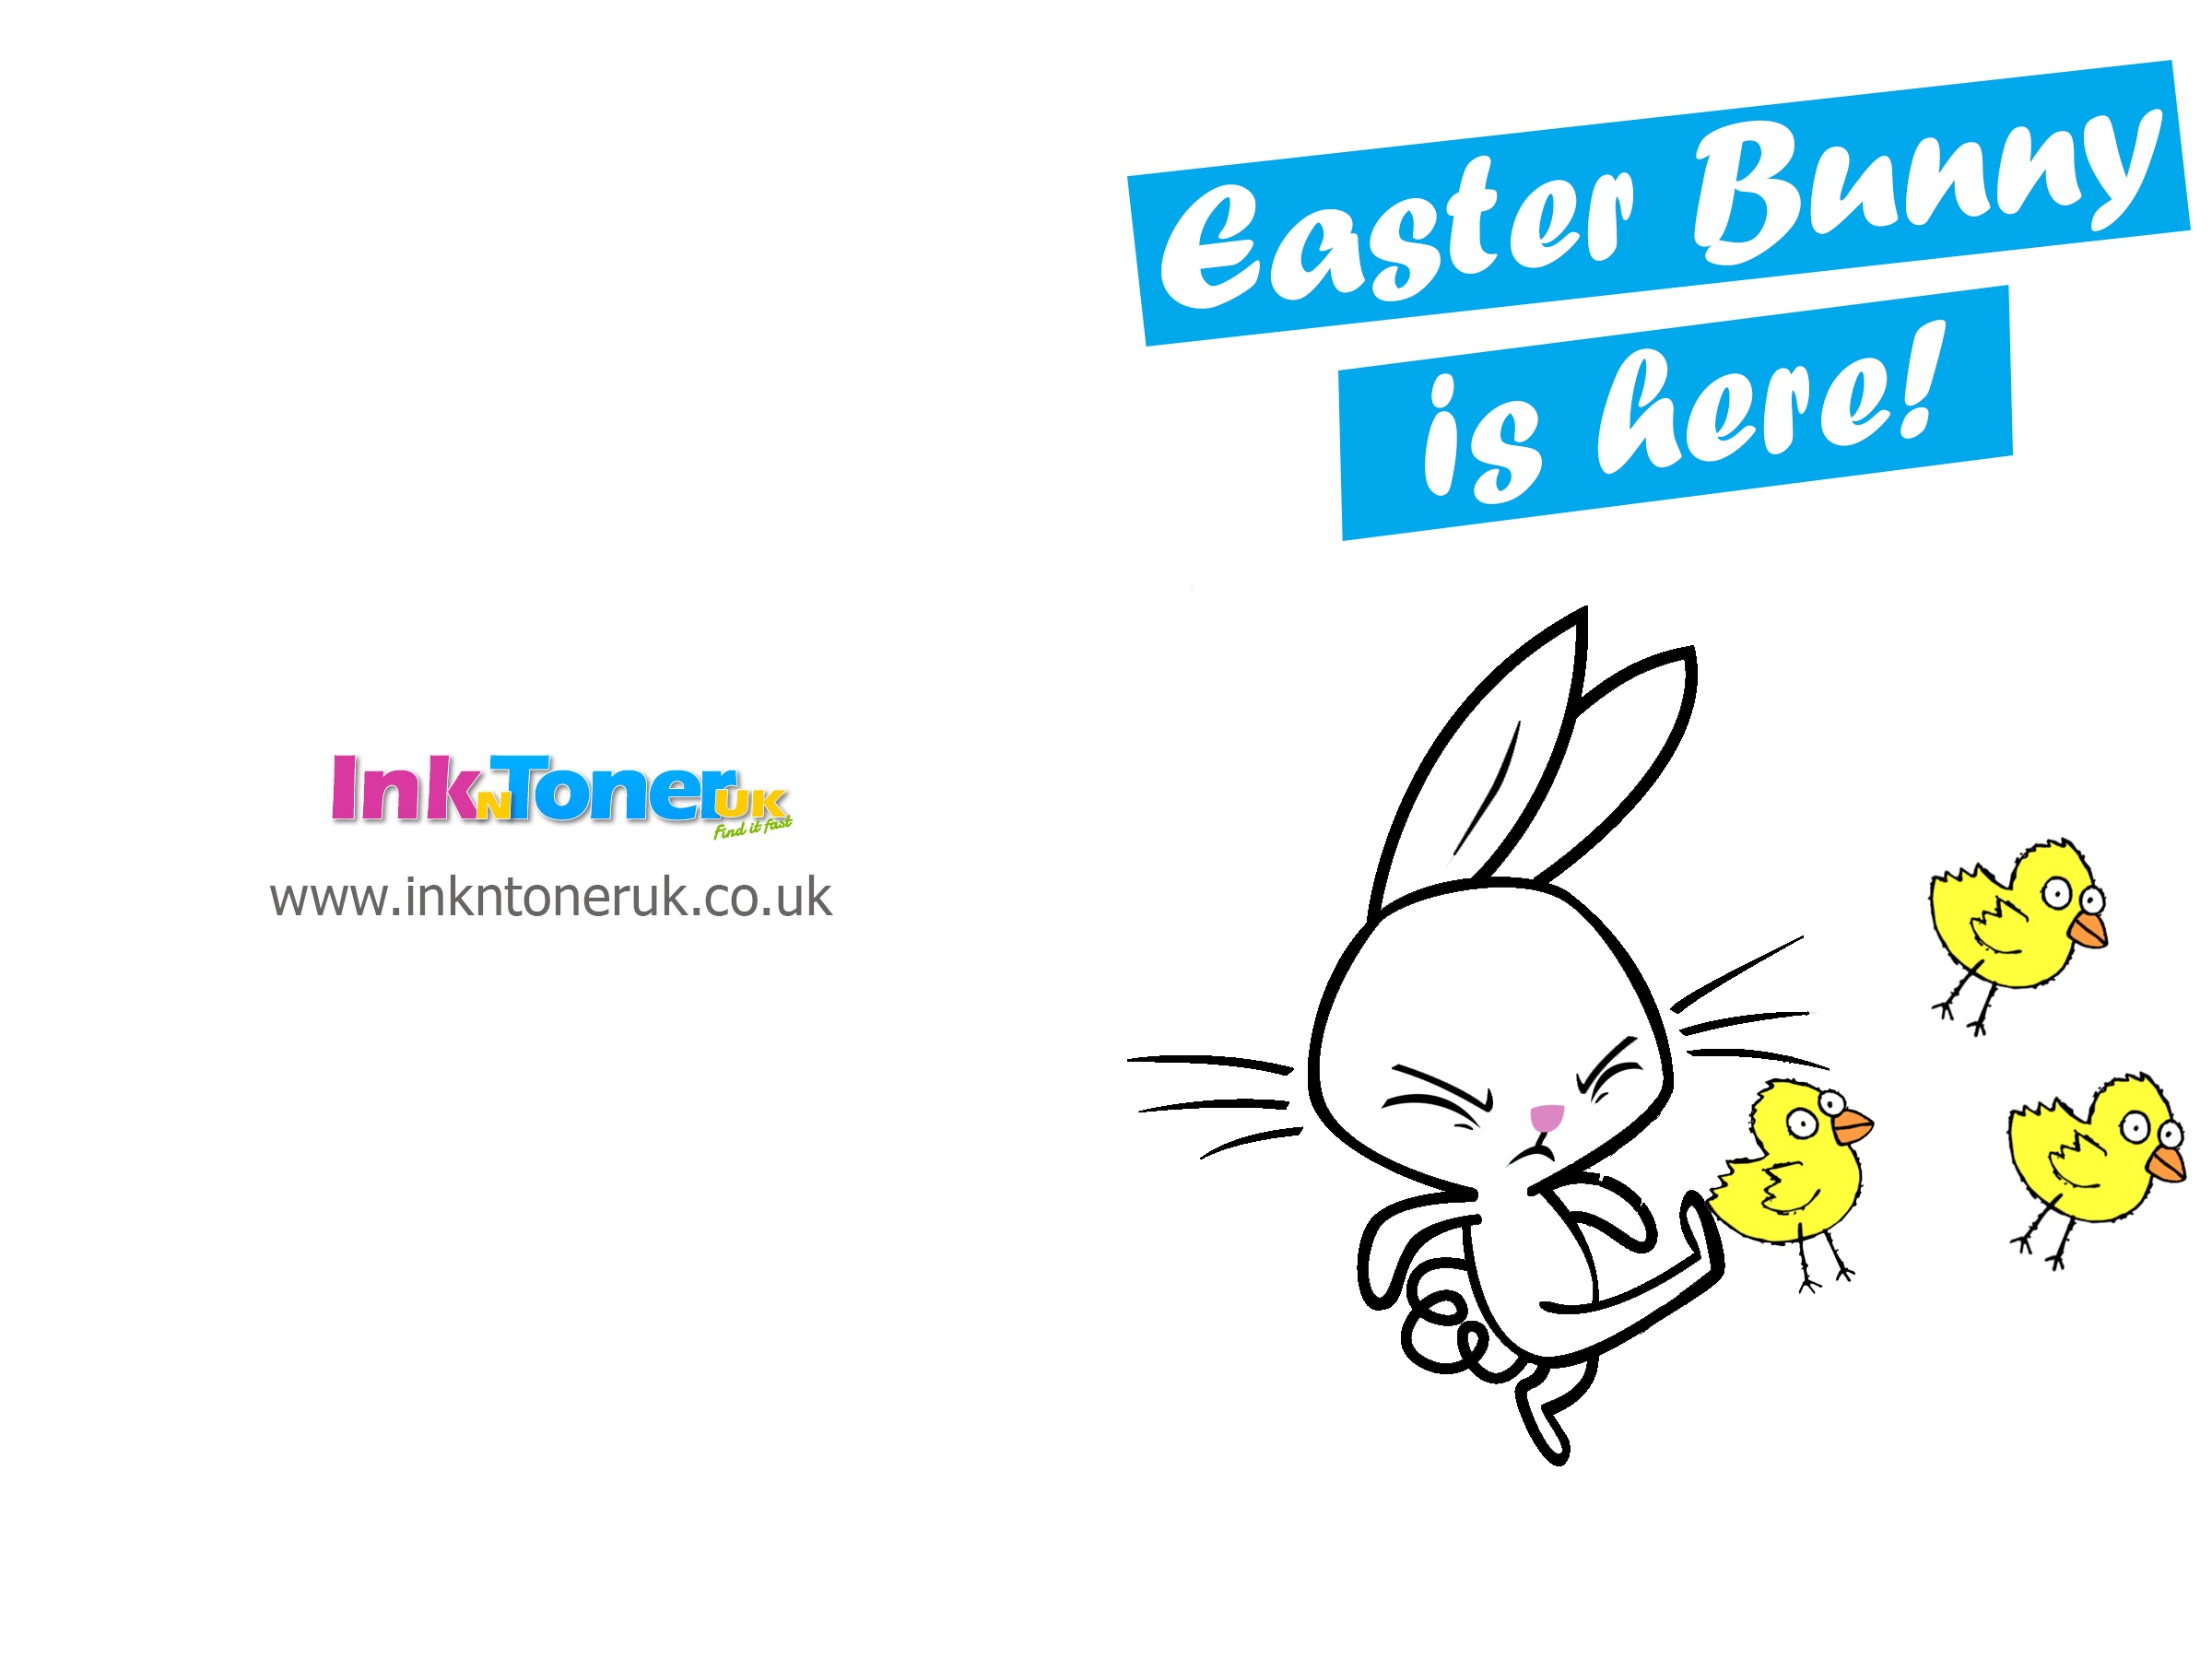 Free Printable Easter Cards | Inkntoneruk Blog - Free Printable Easter Cards